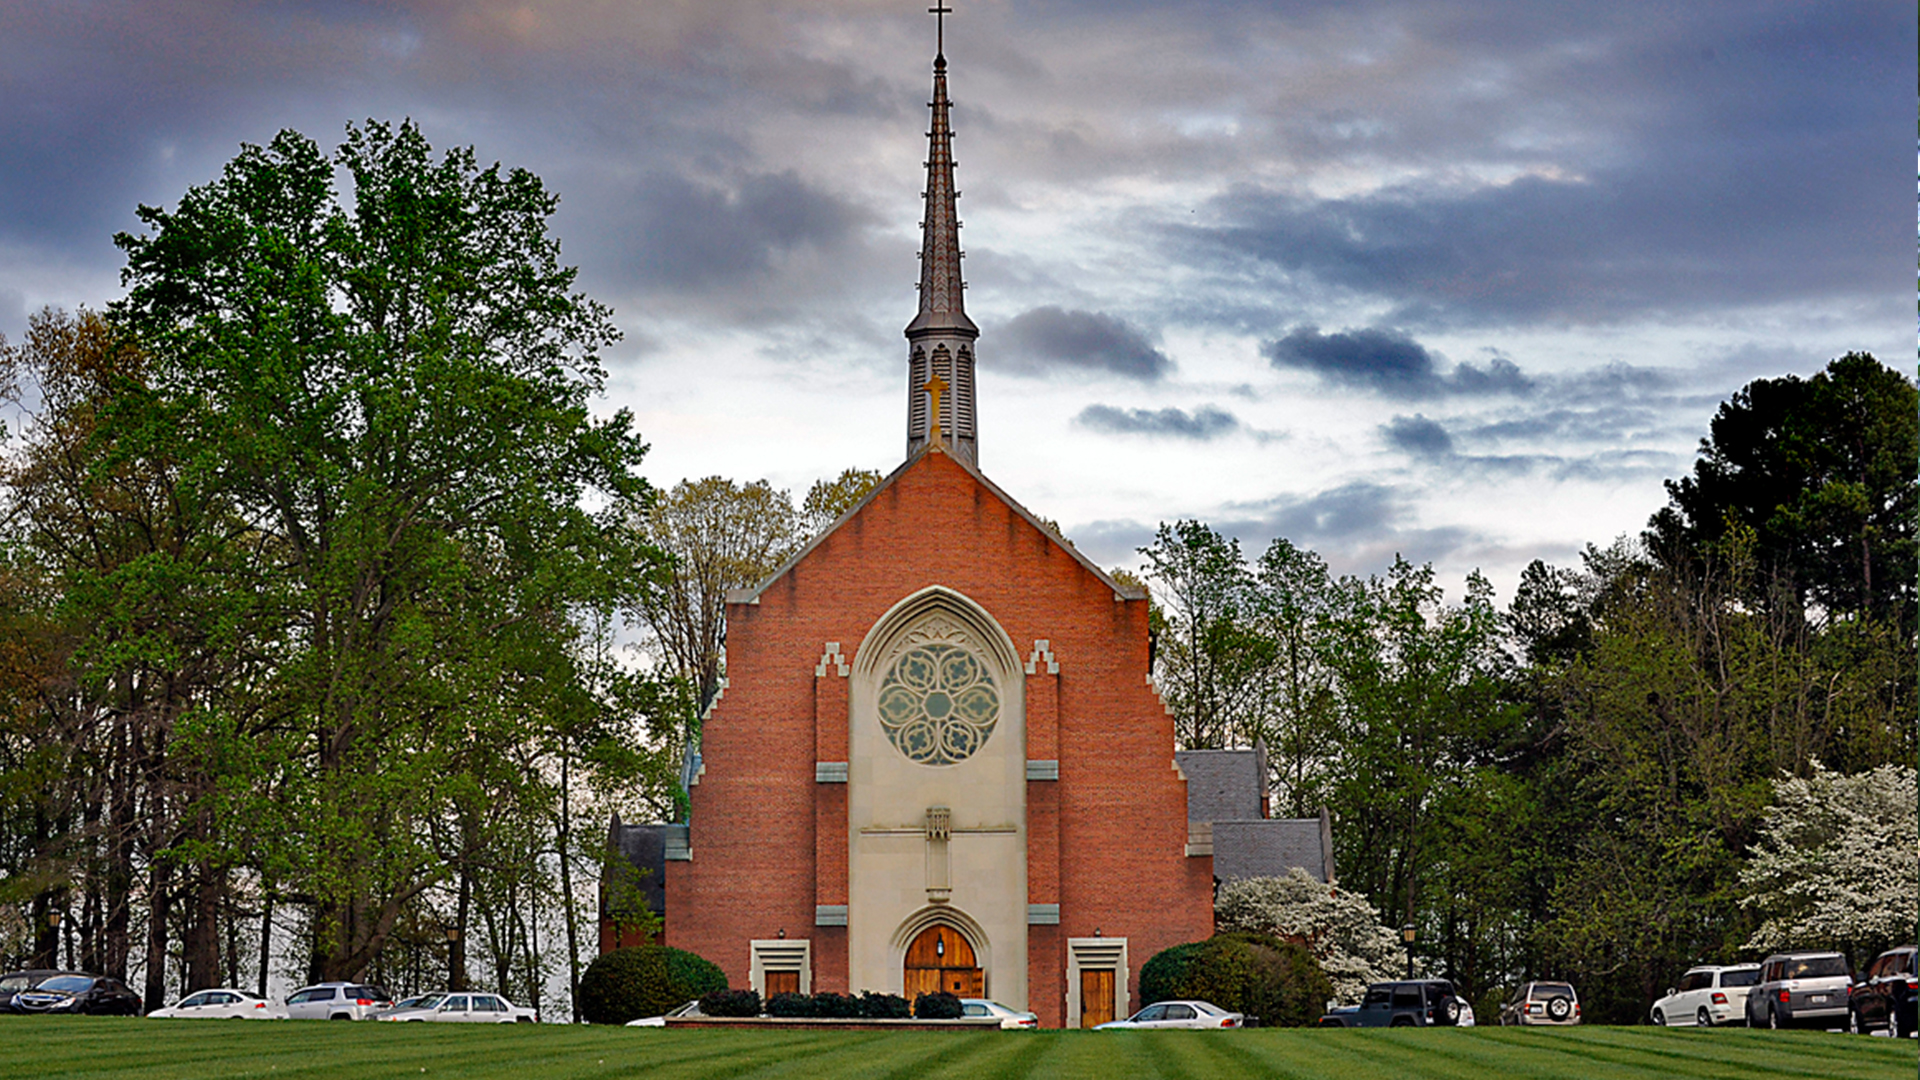 Omwake-Dearborn Chapel